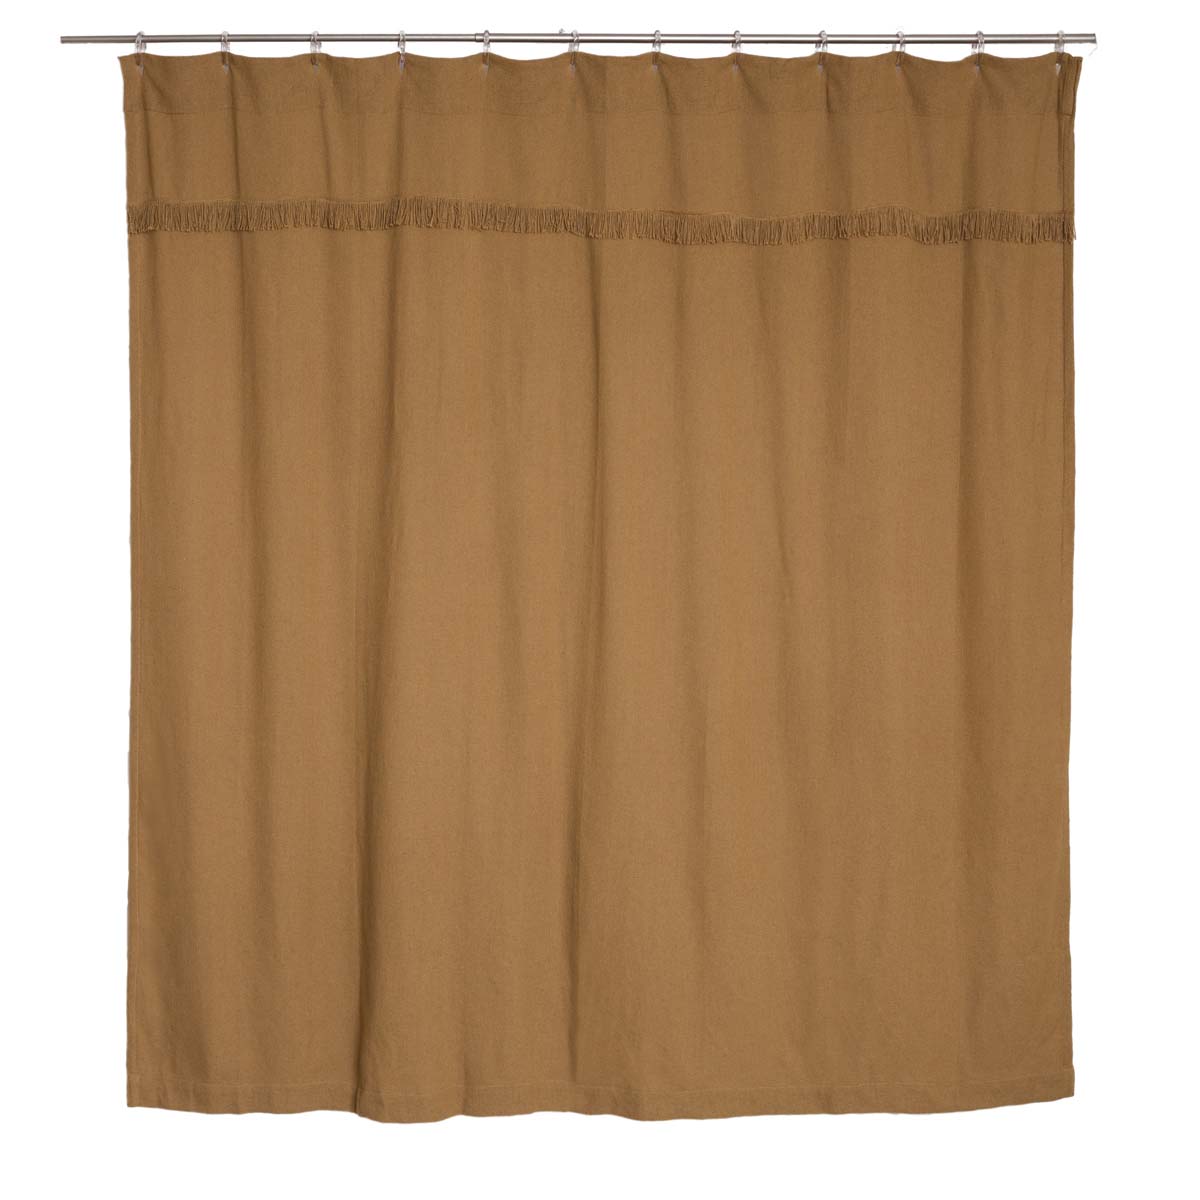 Burlap Antique White Shower Curtain 72x72:Bedding and Bath ...